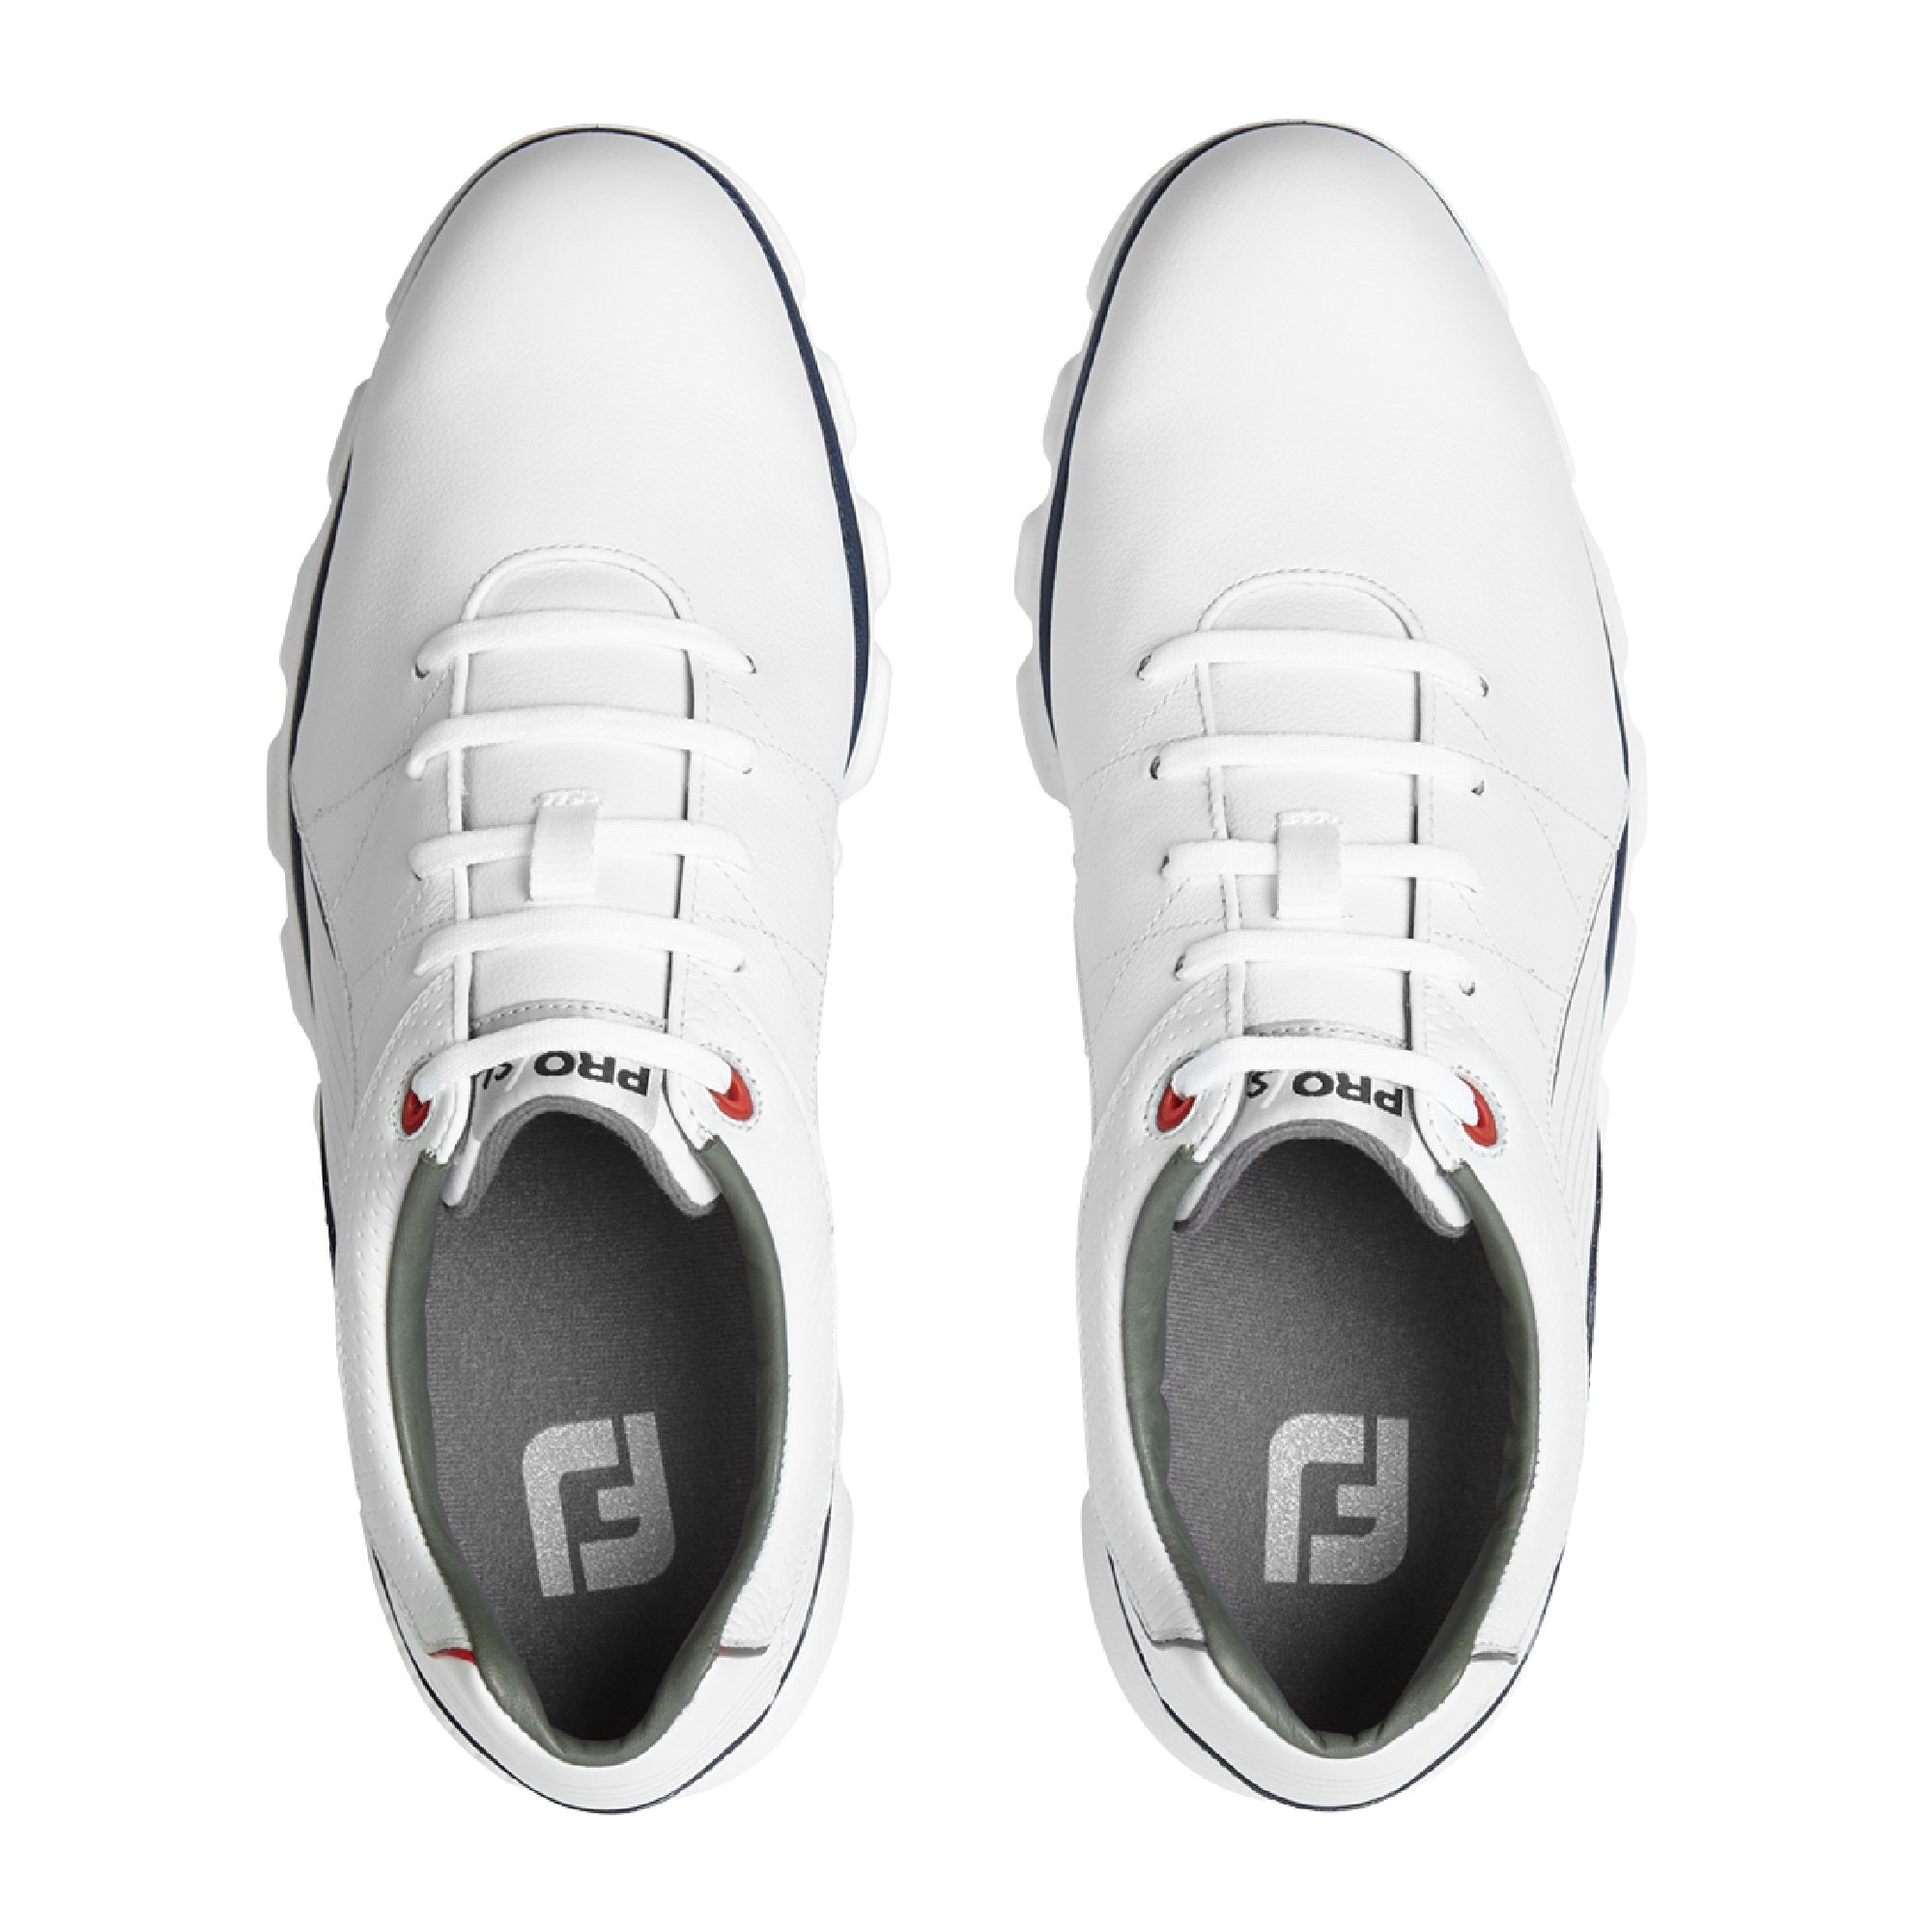 FootJoy Pro SL Golf Shoe 53269 | Function18